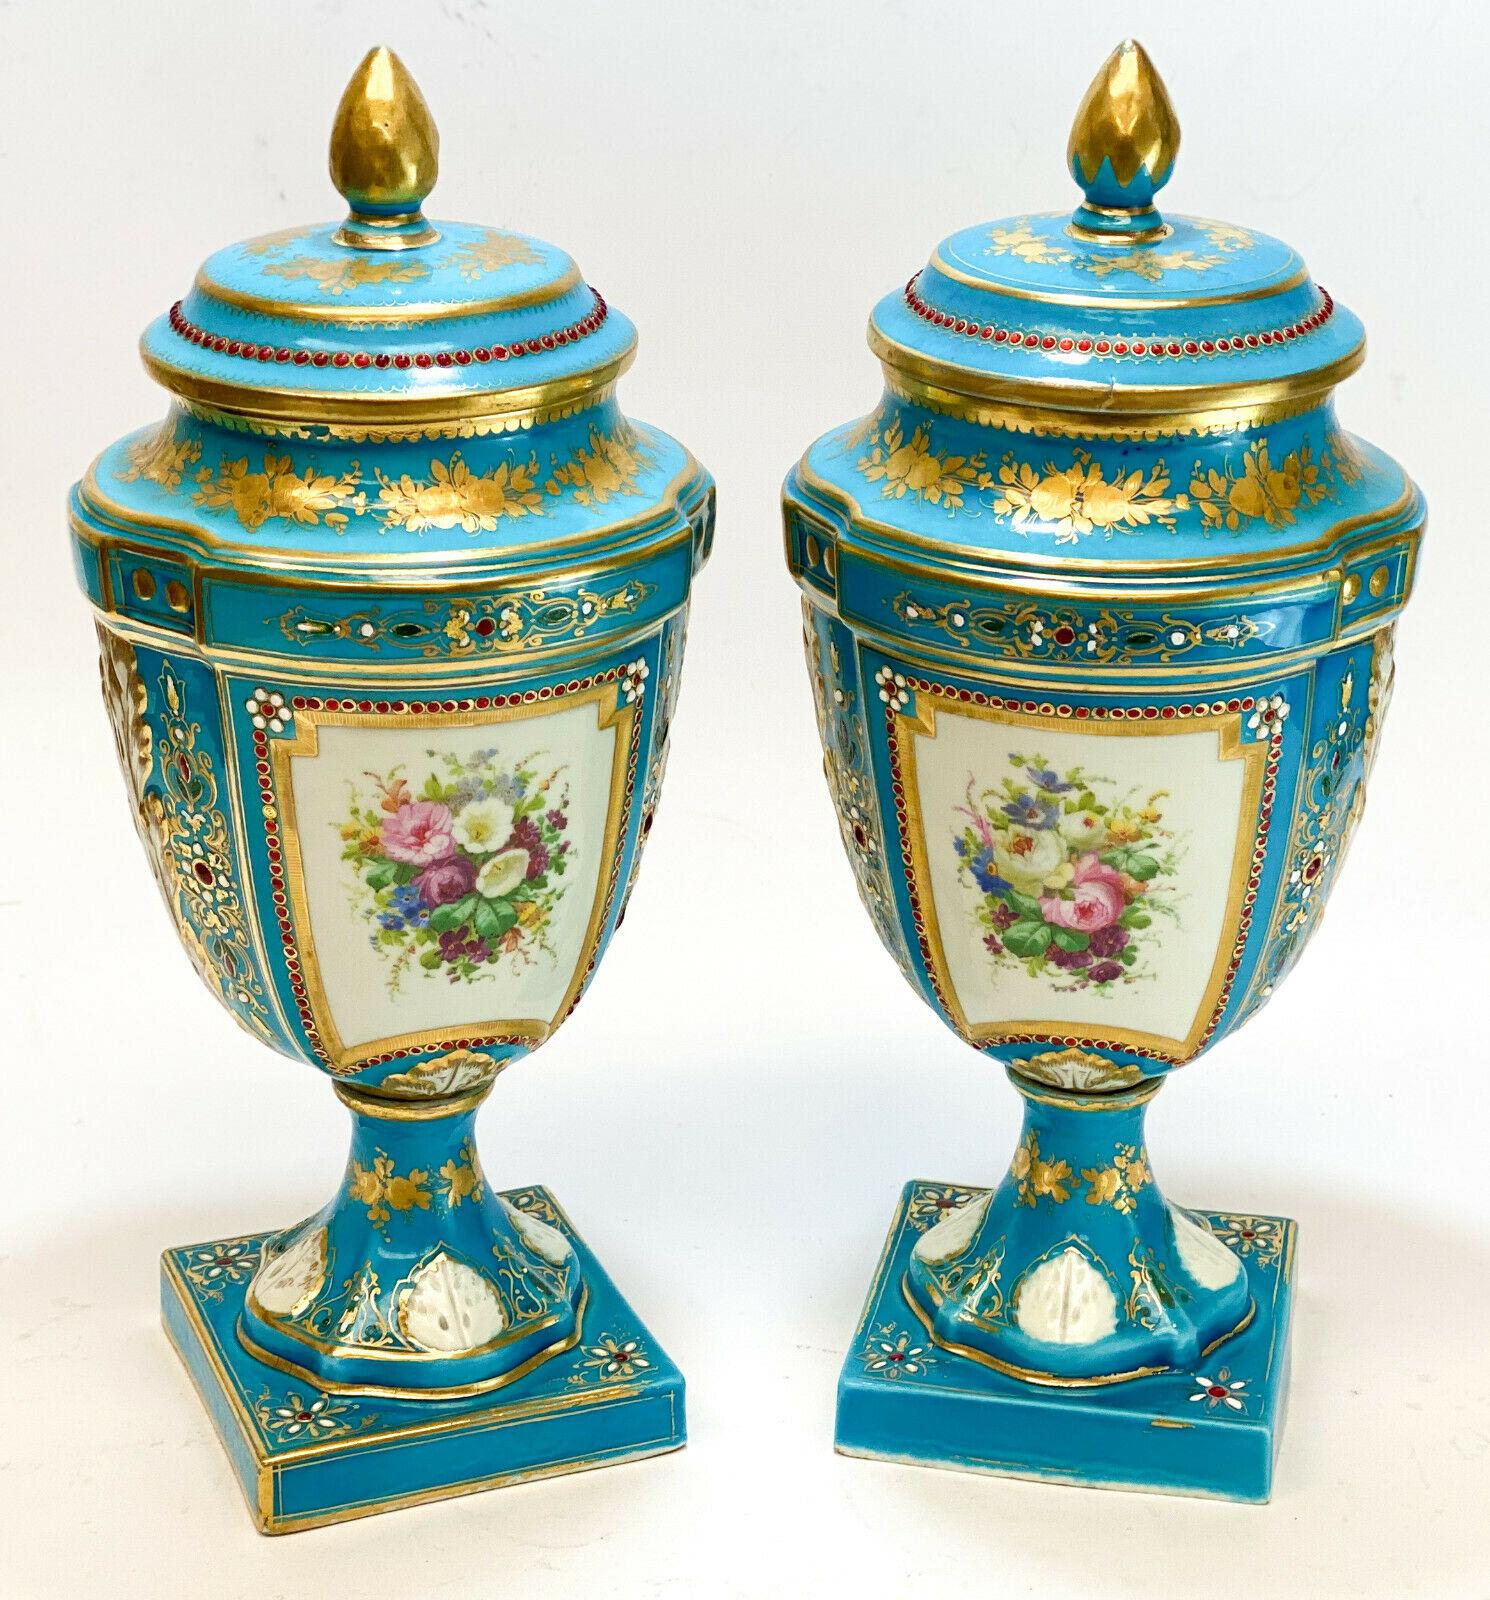 Sèvres France Porcelain Jeweled Enamel Lidded Urns In Good Condition For Sale In Pasadena, CA